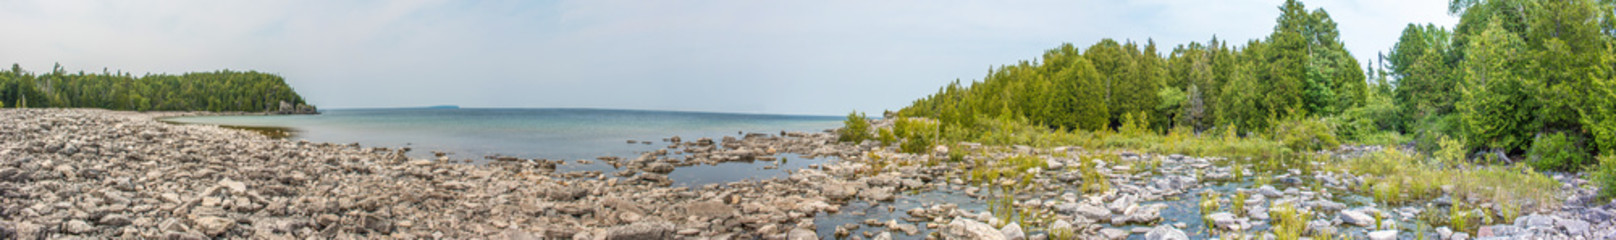 Rocky Beach at Bruce Peninsula National Park Ontario Canada